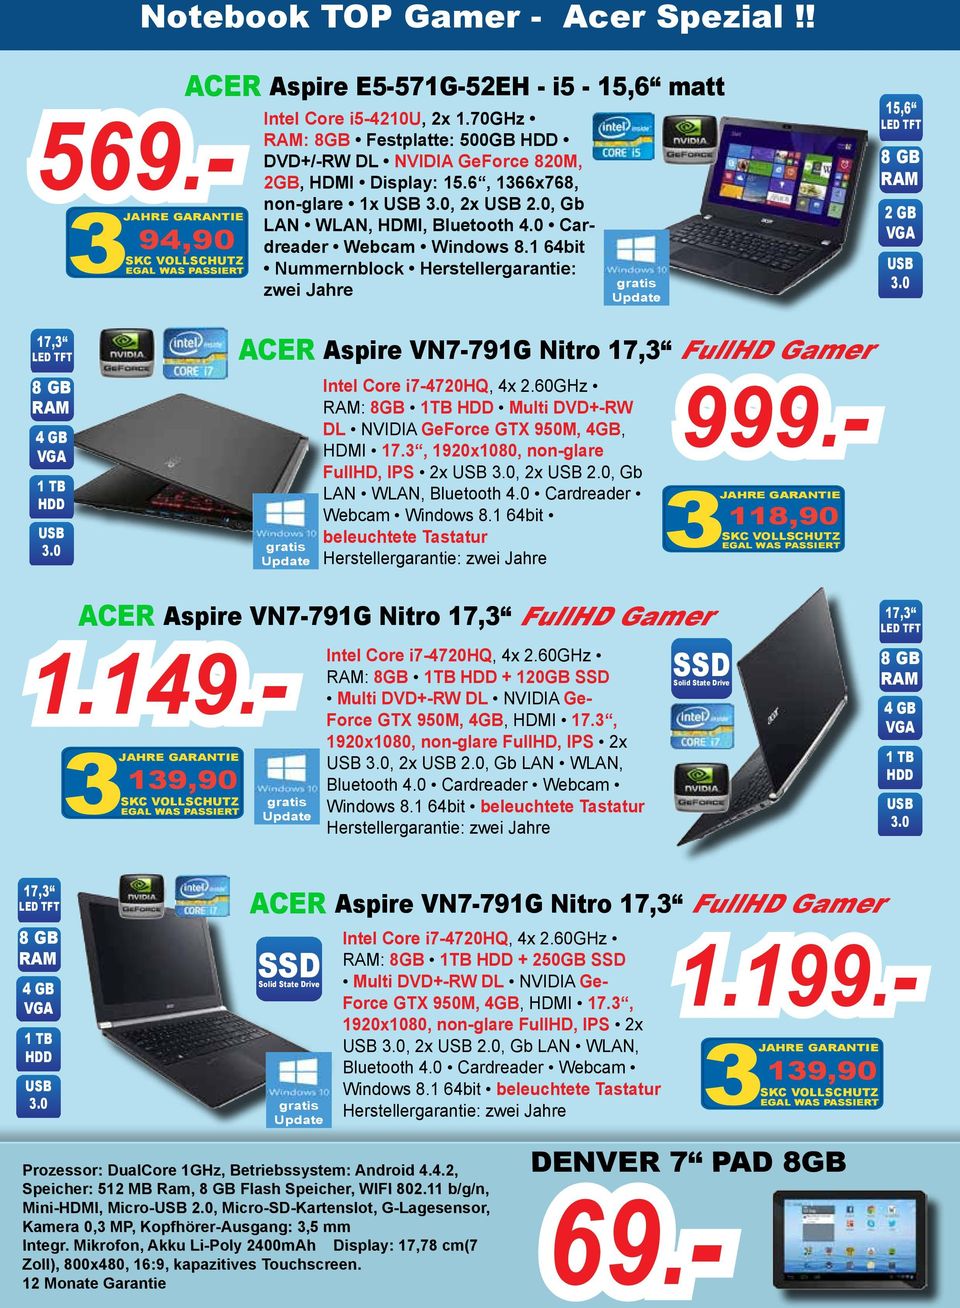 1 64bit Nummernblock Herstellergarantie: zwei Jahre ACER Aspire VN7-791G Nitro 17,3 FullHD Gamer 17,3 Intel Core i7-4720hq, 4x 2.60GHz : 8GB 1TB Multi DVD+-RW DL NVIDIA GeForce GTX 950M, 4GB, HDMI 17.